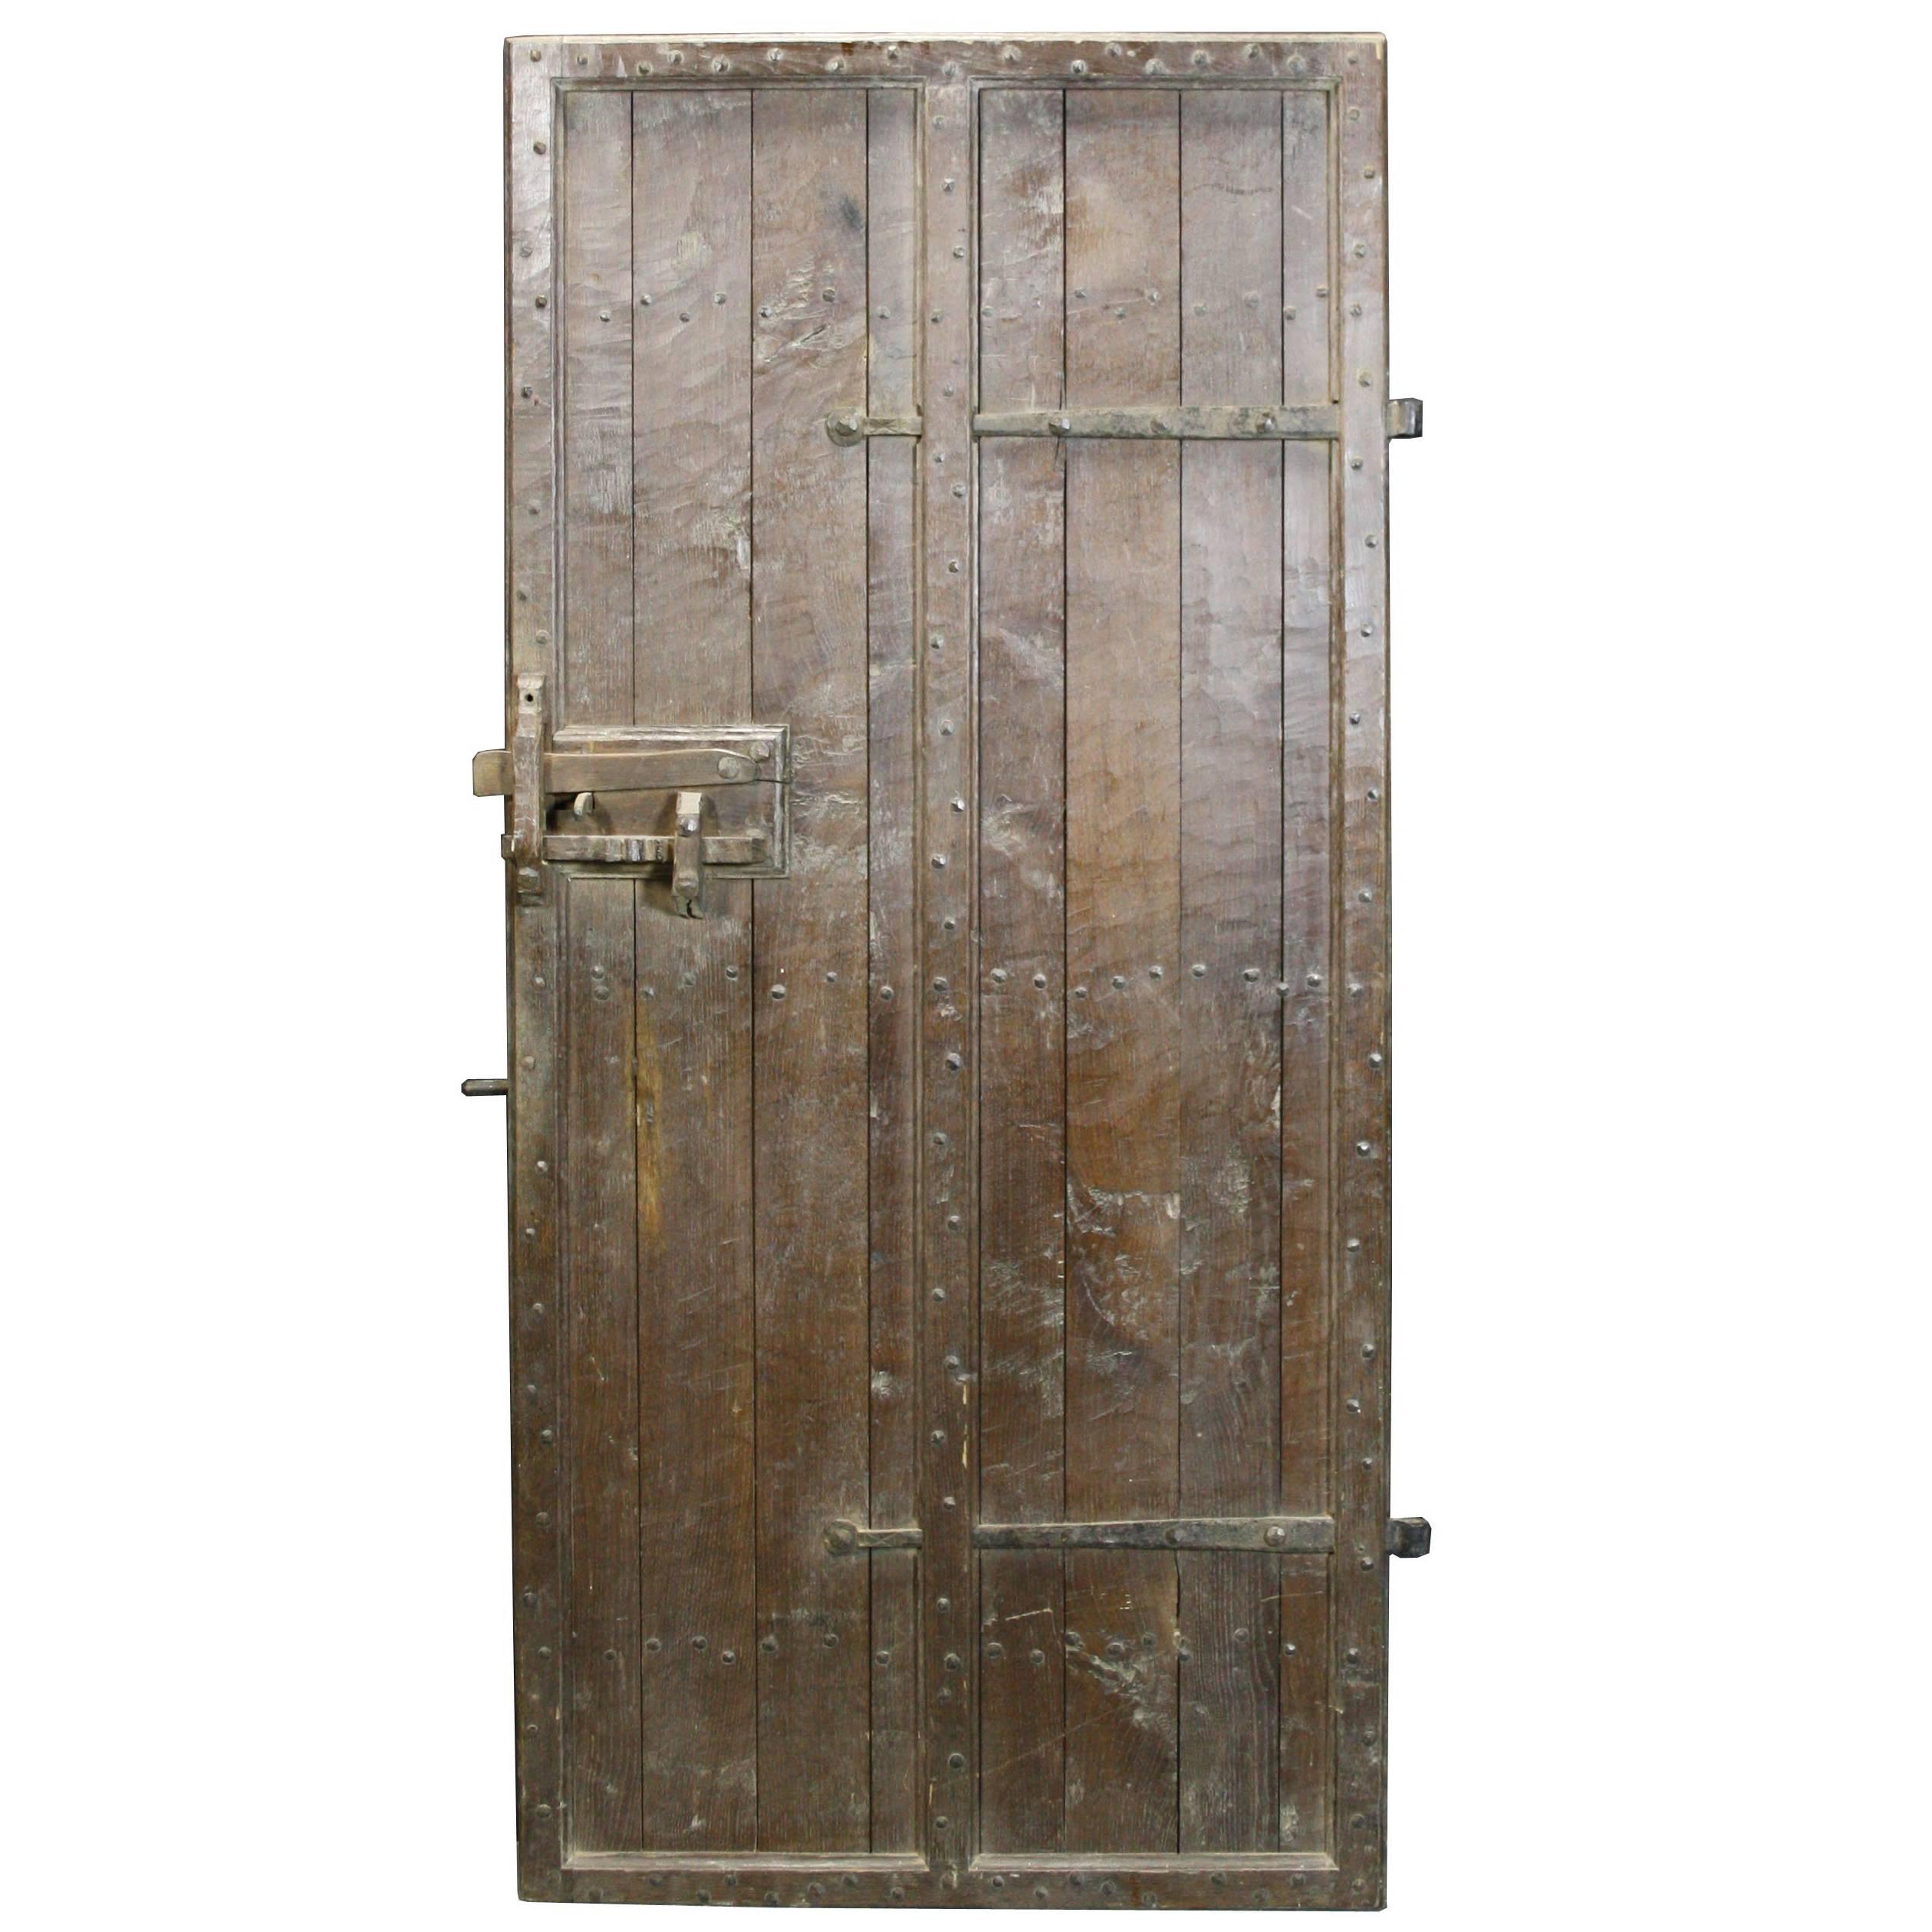 High Quality Oak Feature Door, circa 1900